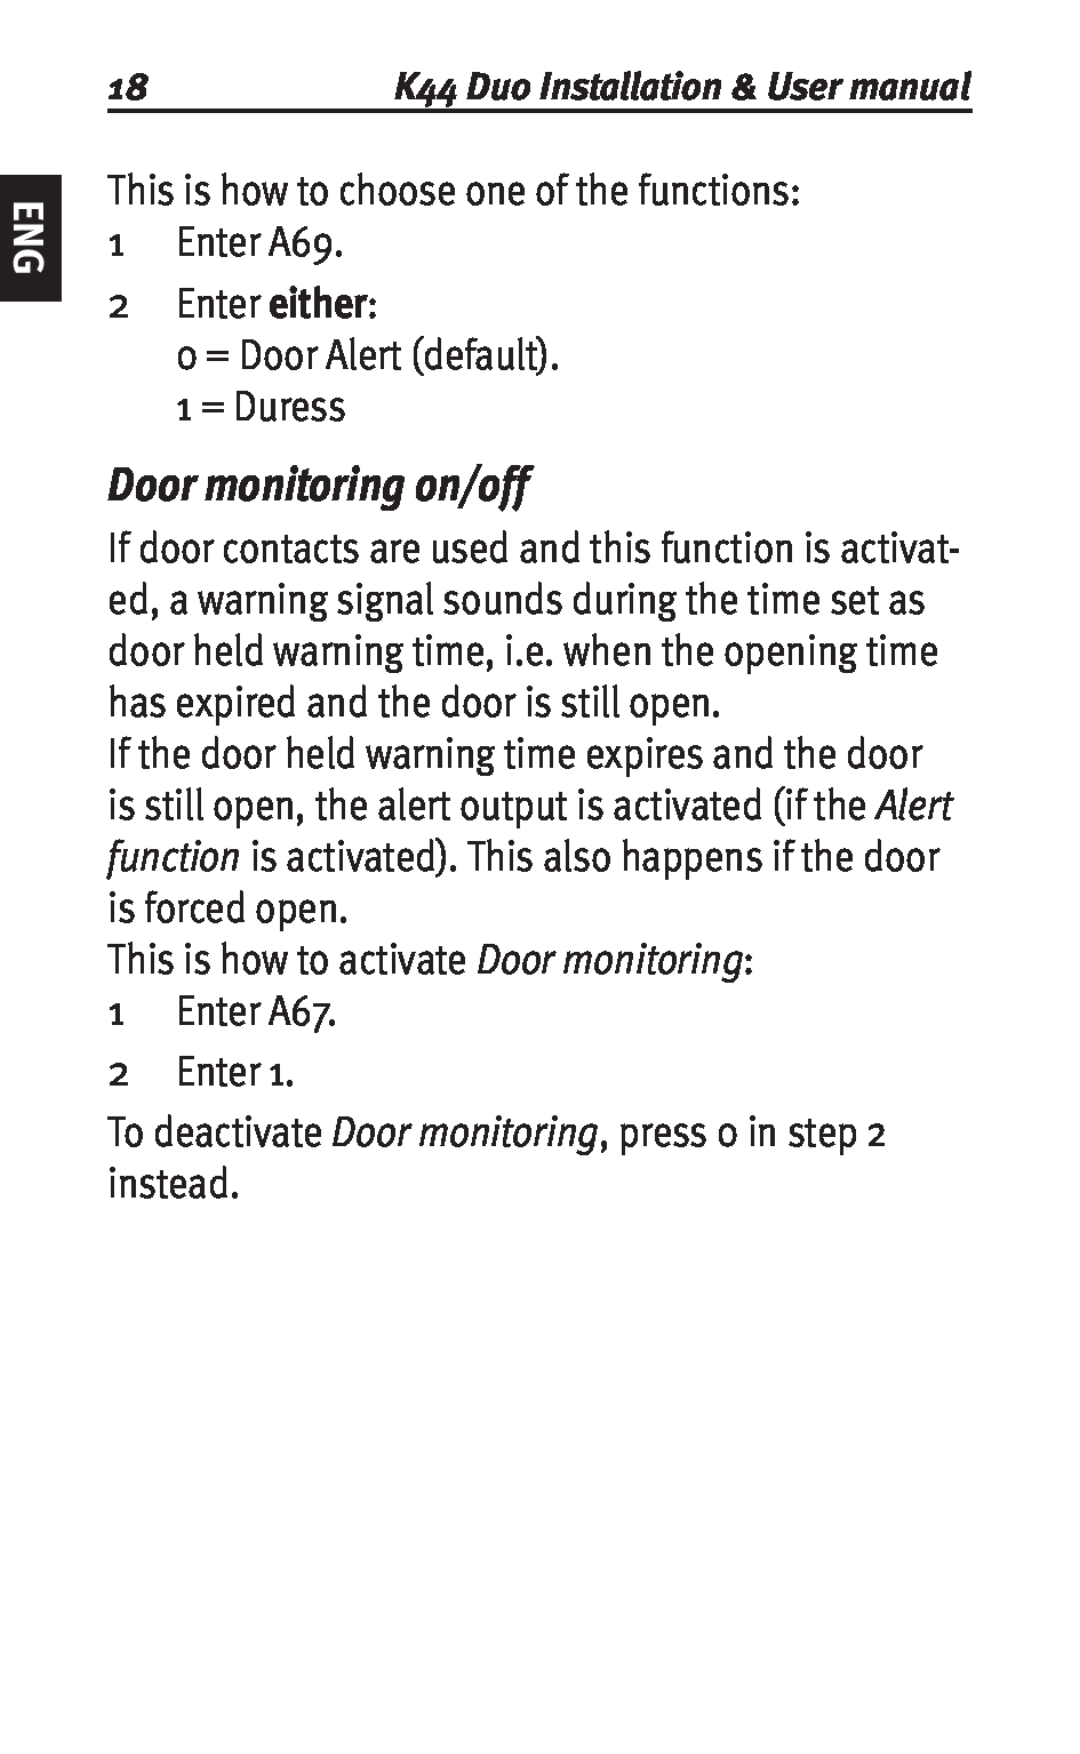 Siemens K44 user manual Door monitoring on/off 